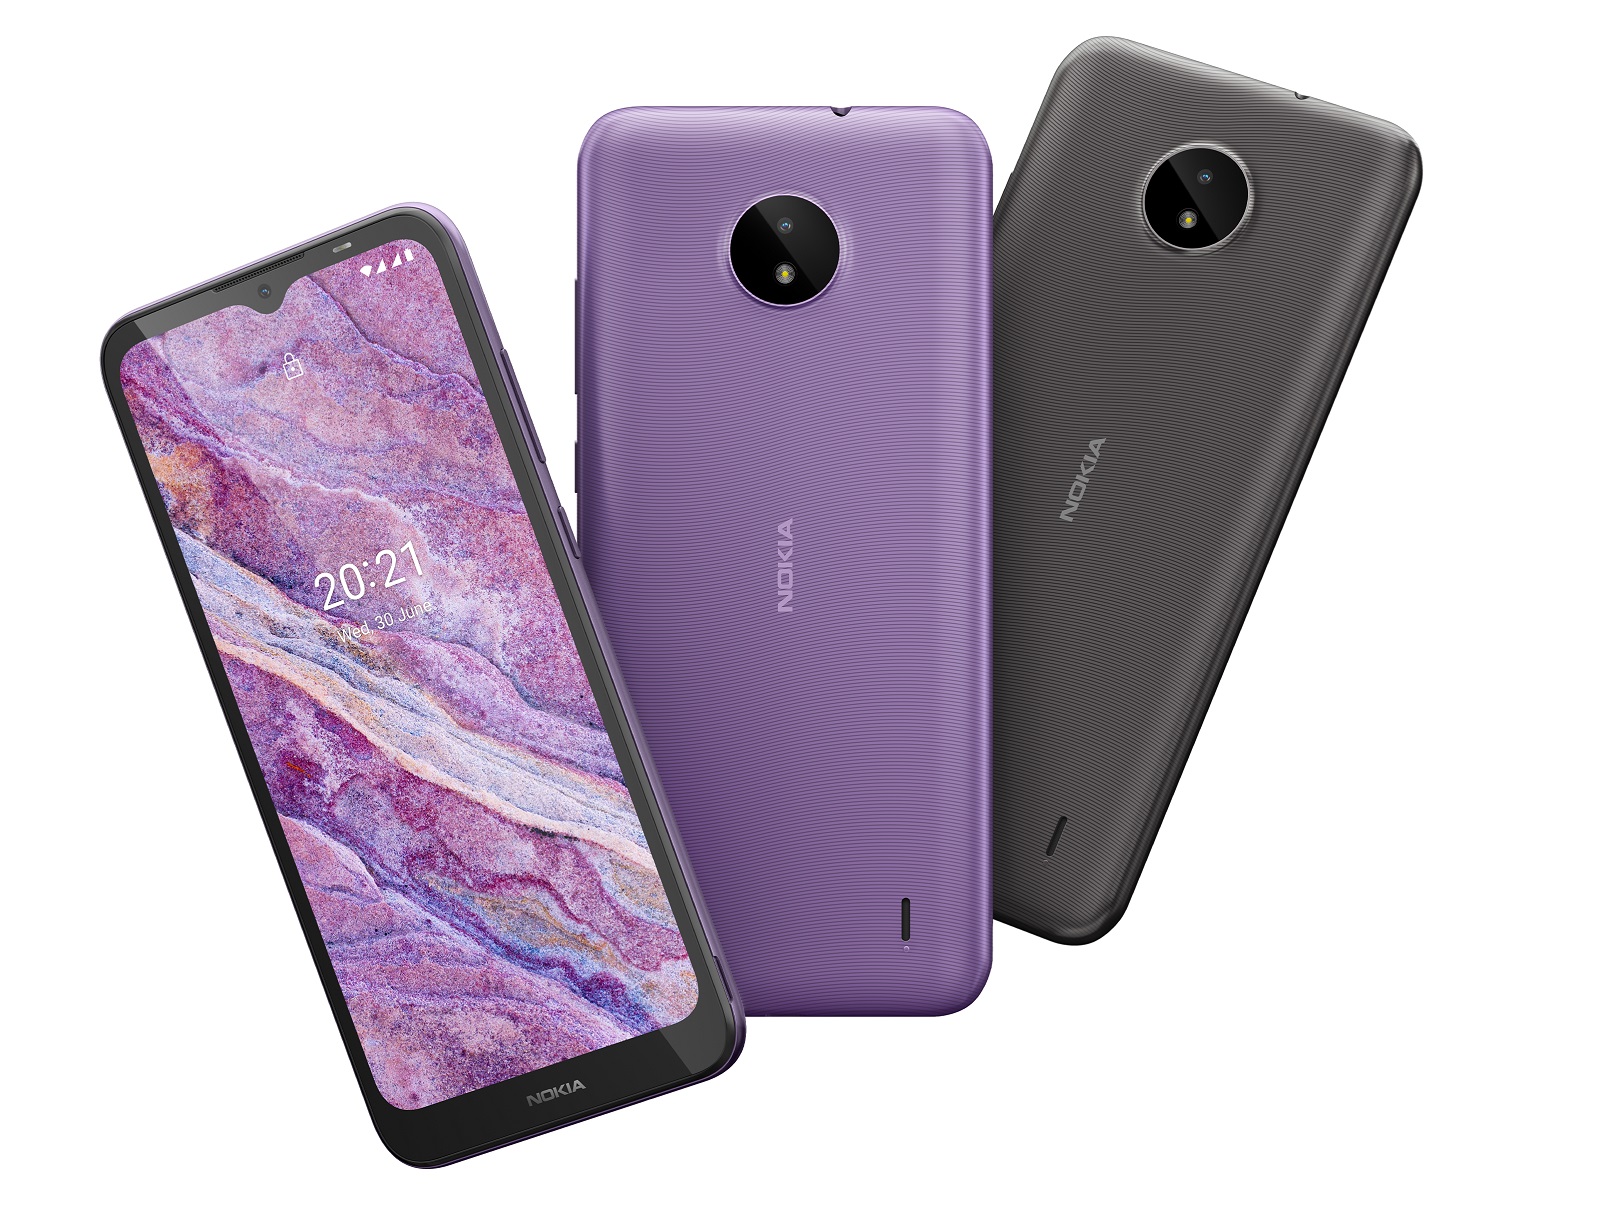 6 new Nokia smartphones announced across different price ranges Gearburn